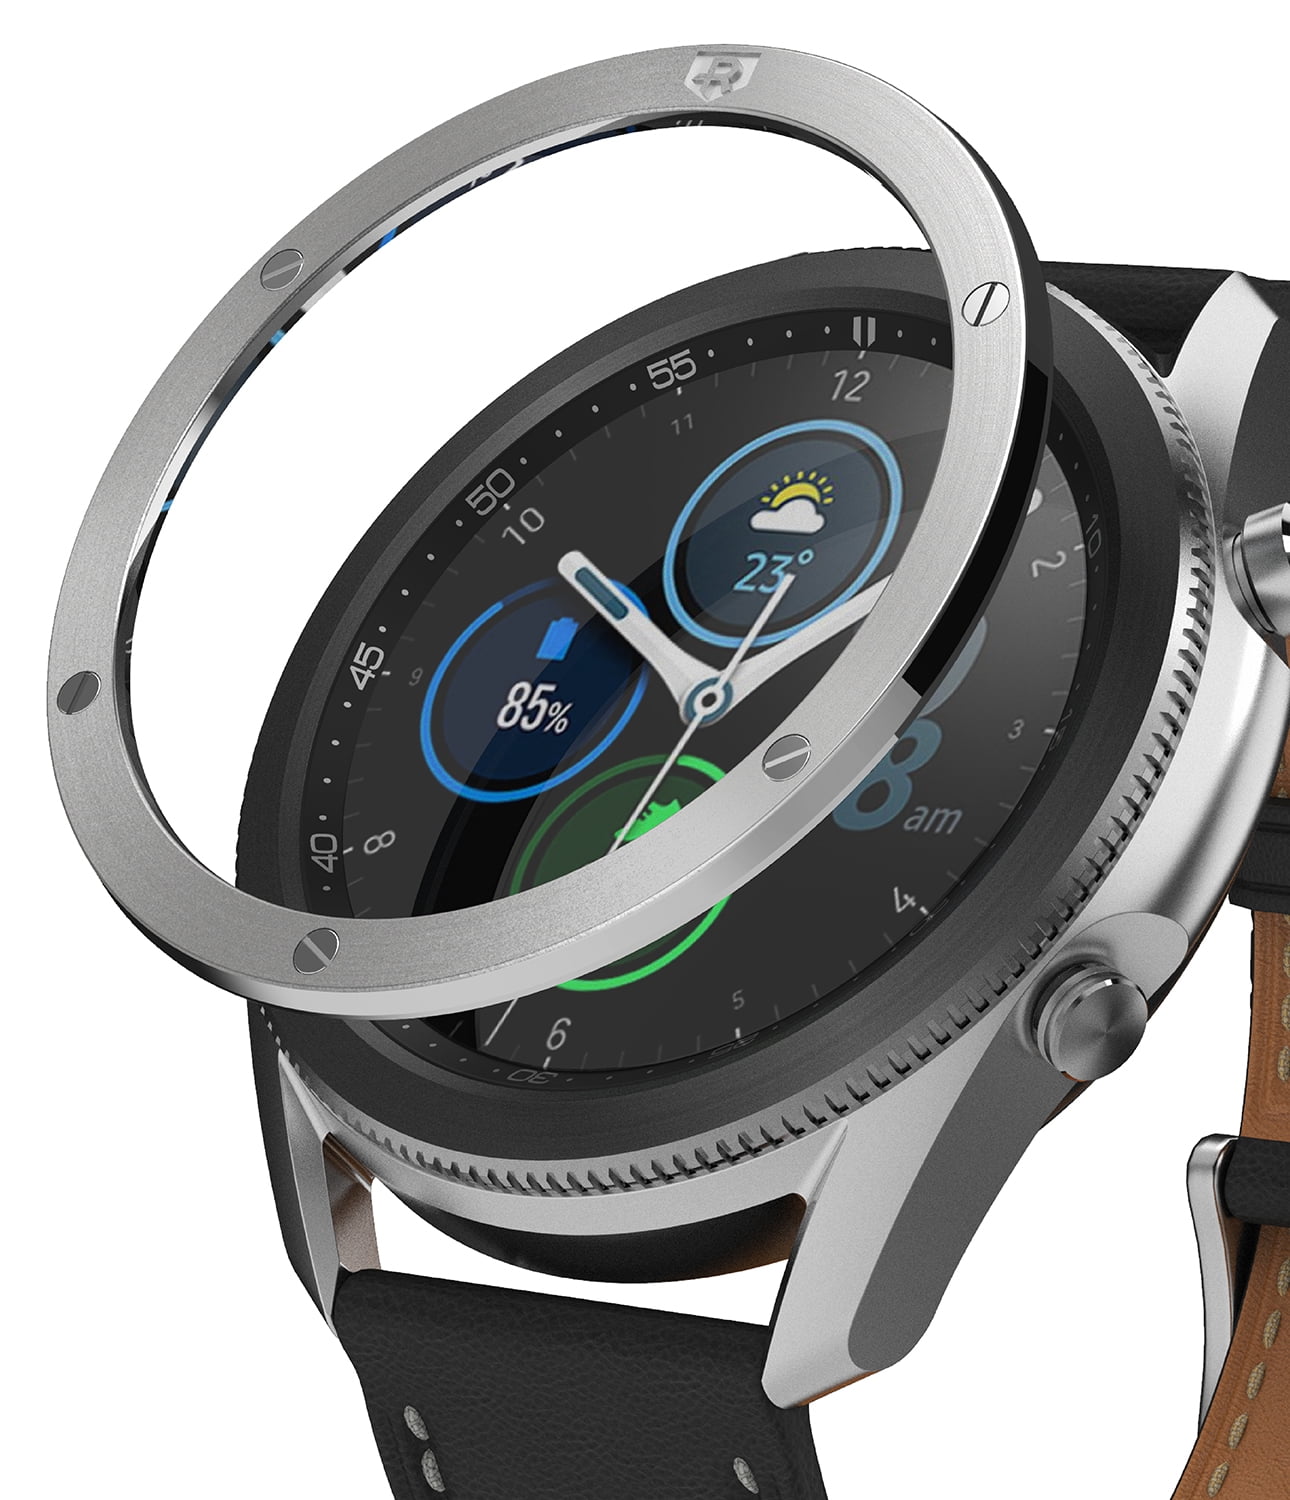 Ringke Bezel Styling for Galaxy Watch 3 Case, Galaxy Watch 3 45mm Cover ...